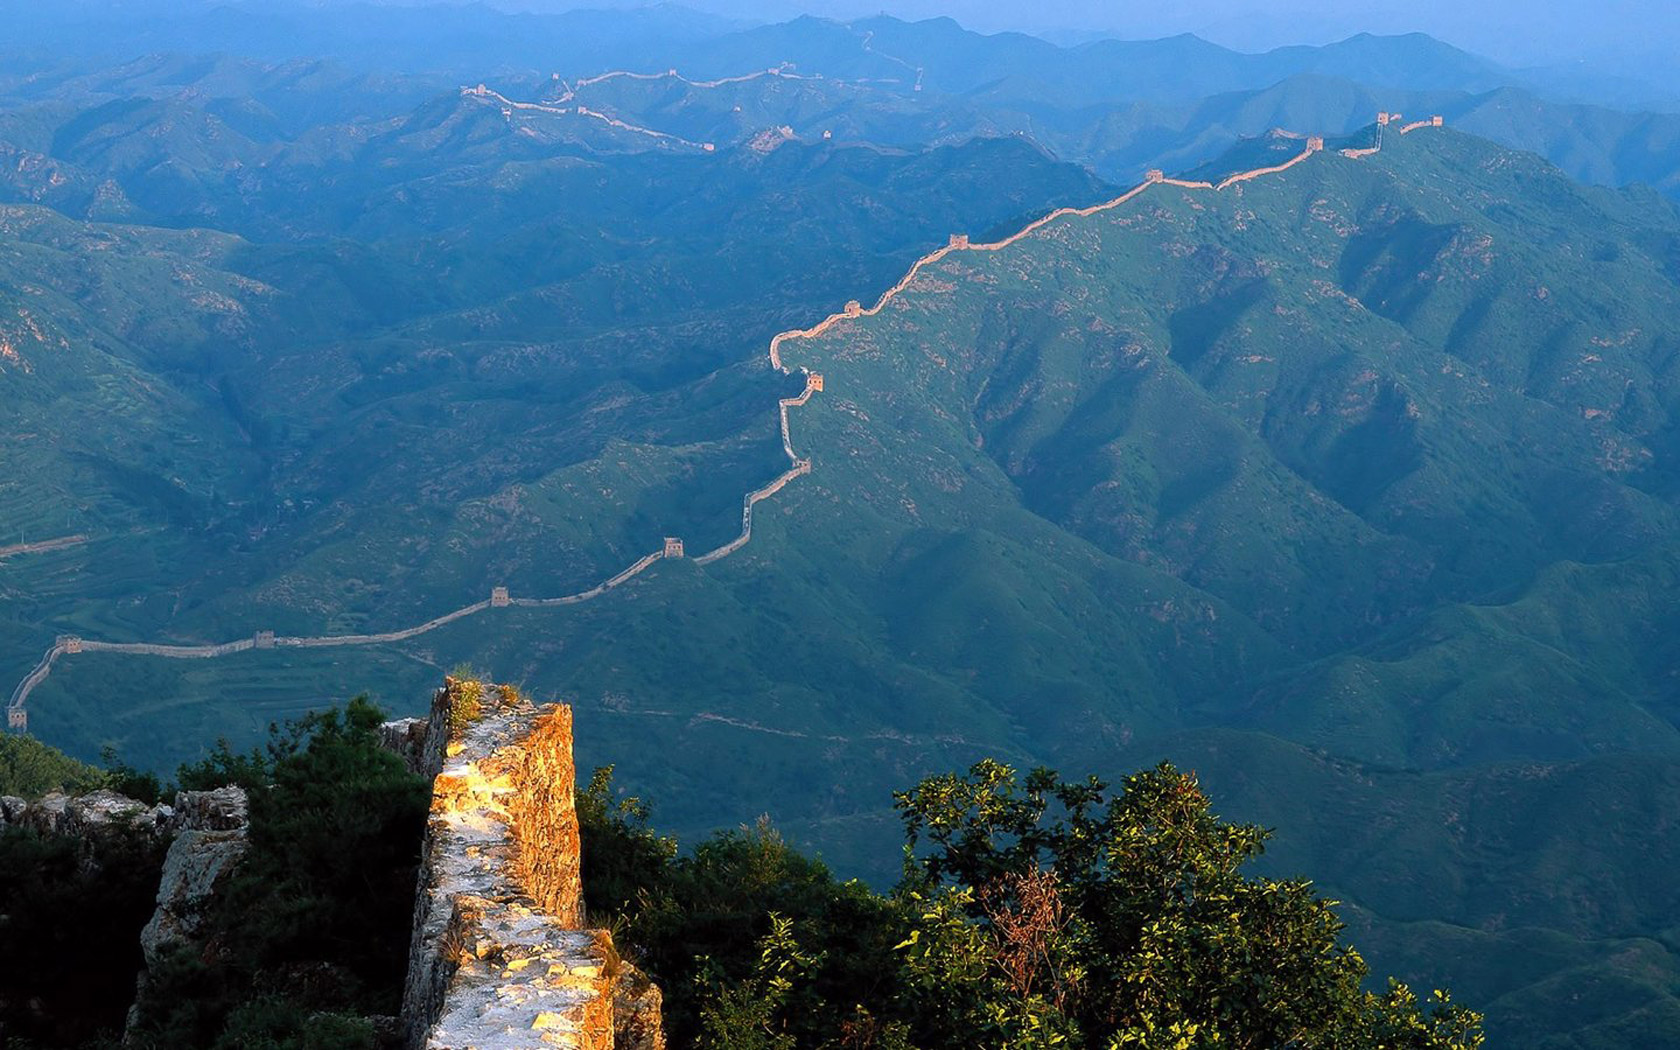 Great-Wall-of-China.jpeg (1680×1050)